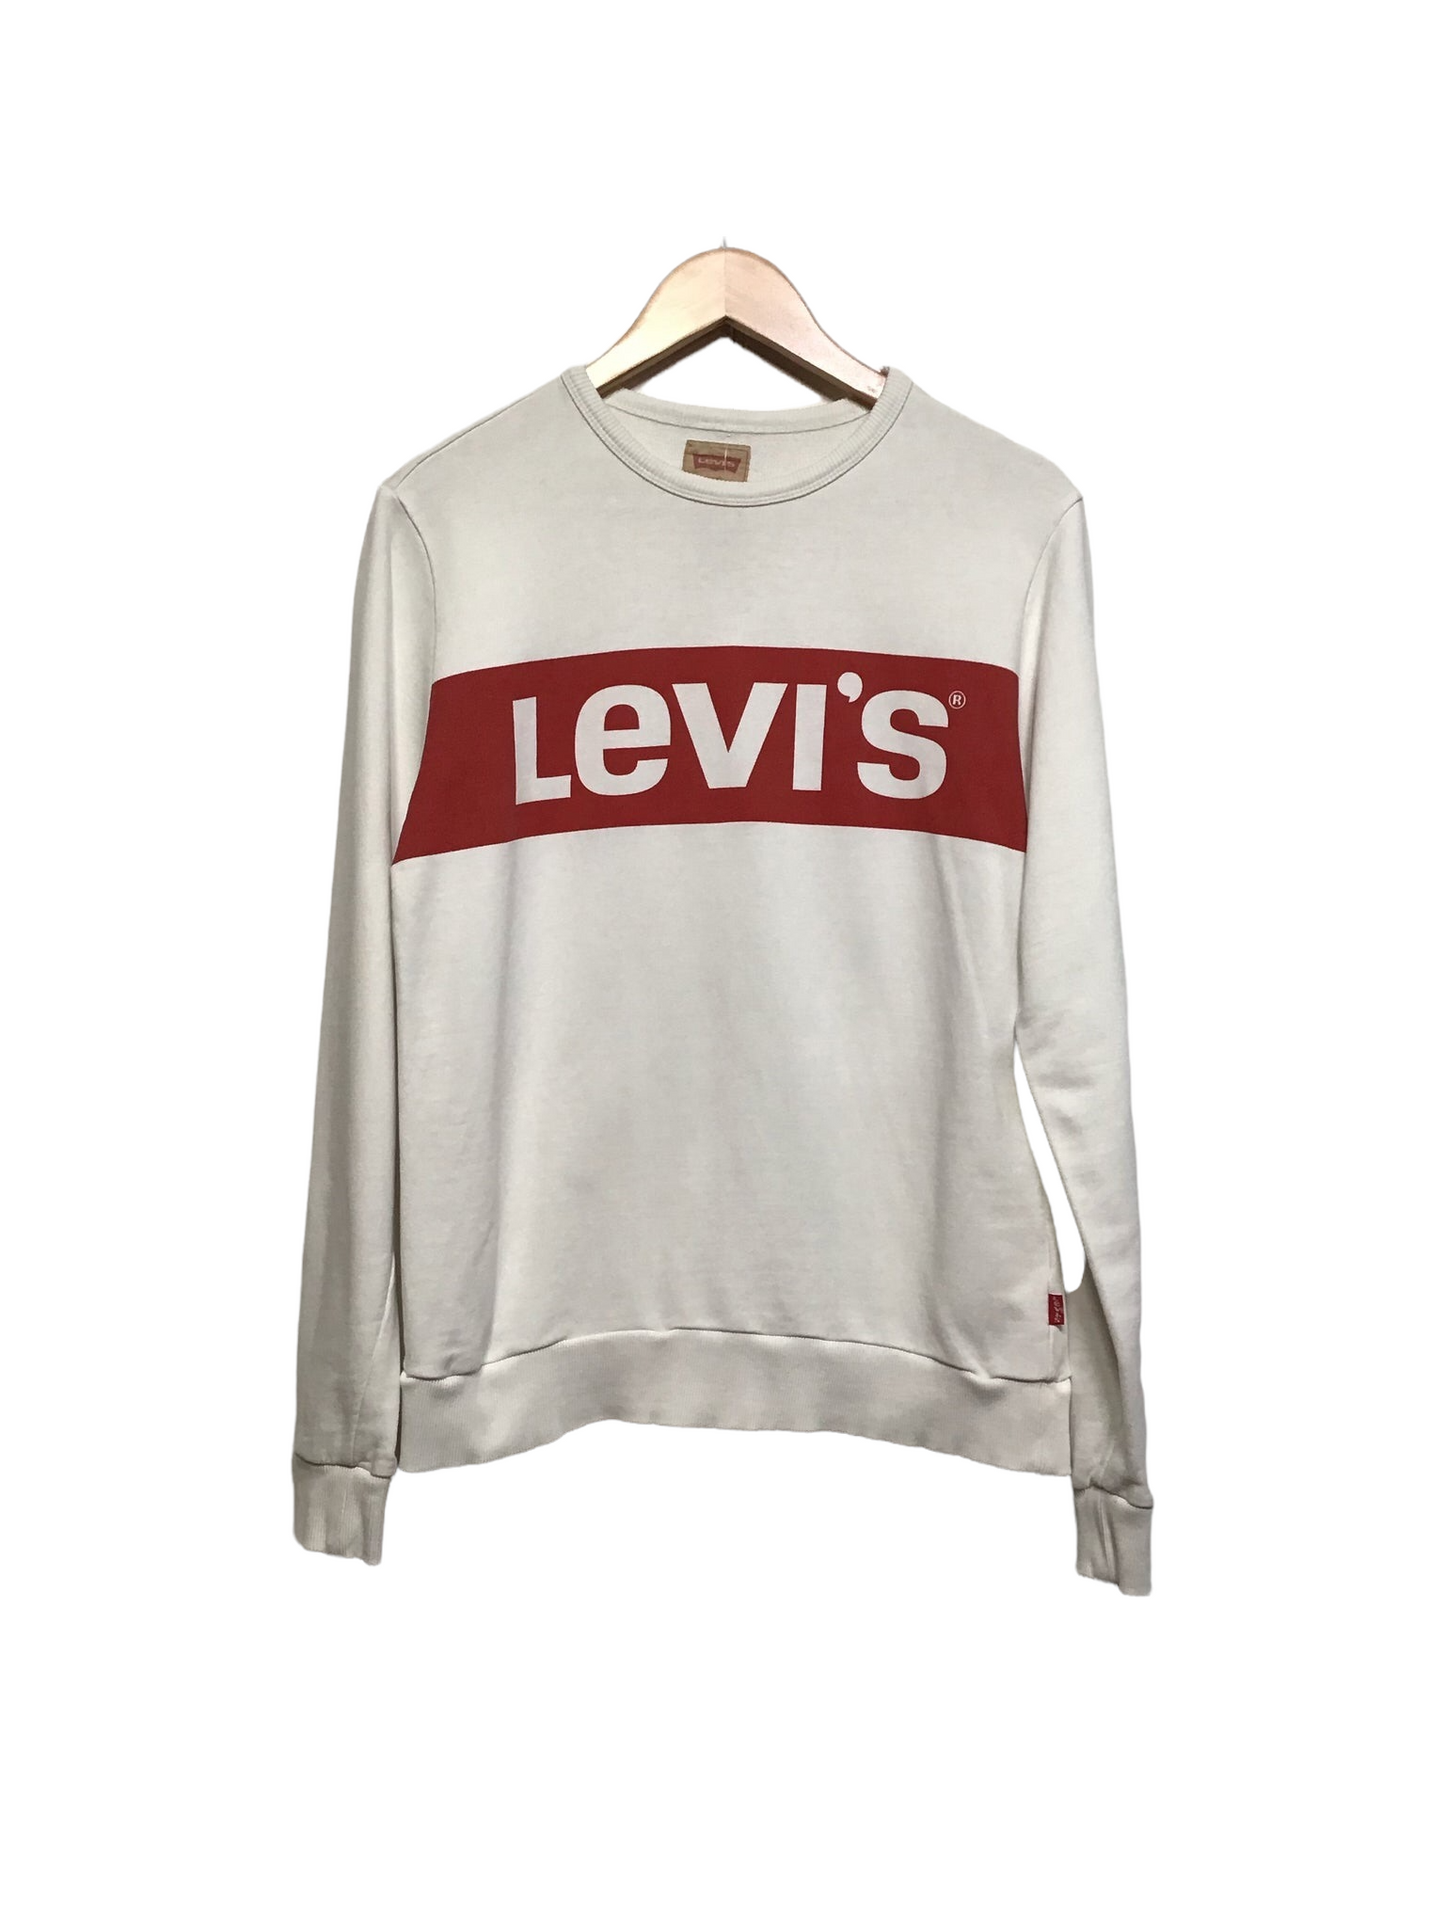 Levi’s Sweatshirt (Size M)